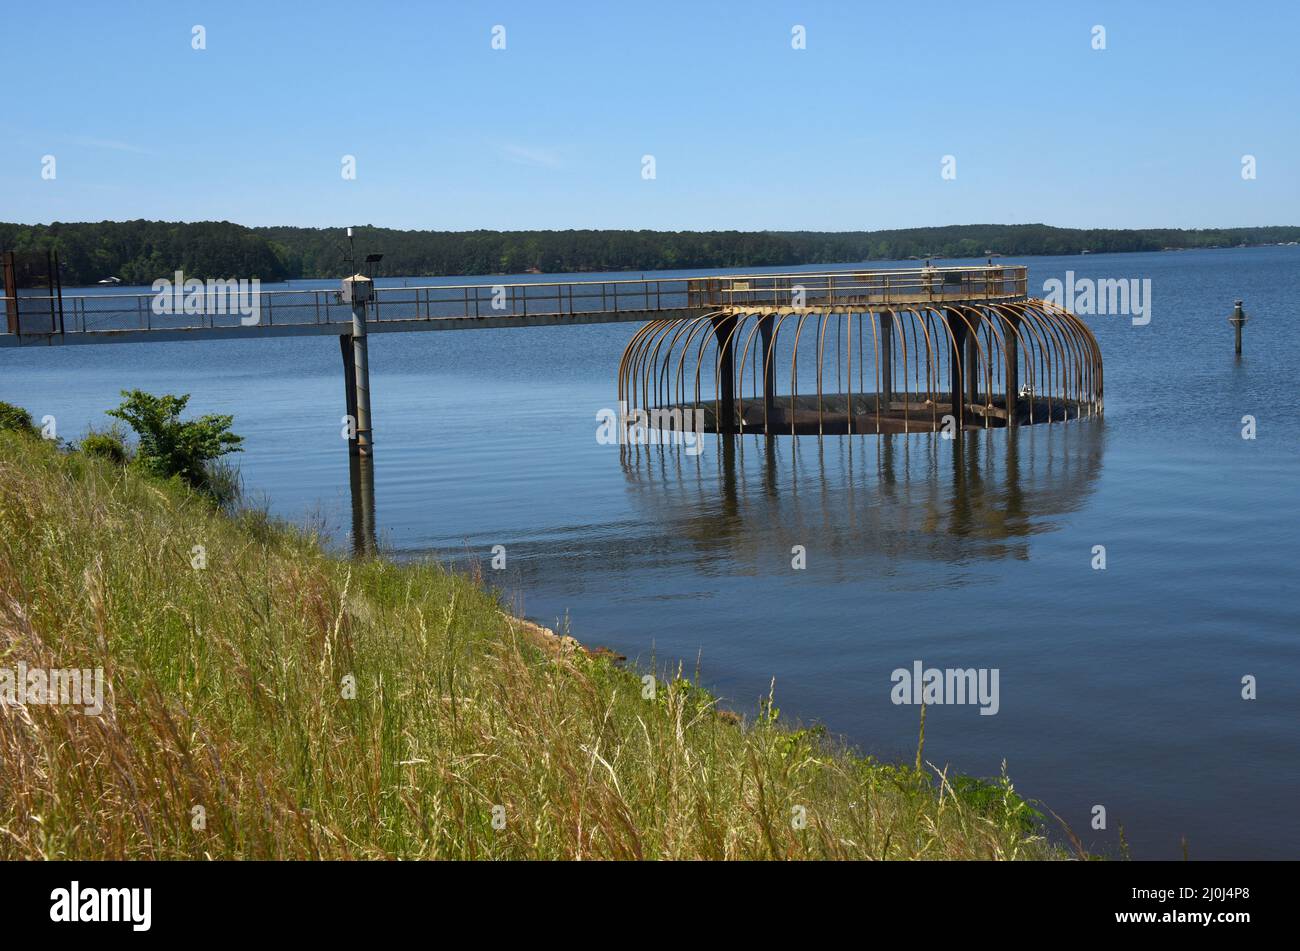 La ruta desbordante del lago Claiborne, en Louisiana, muestra el drenaje del lago a través de la presa controlada. Foto de stock